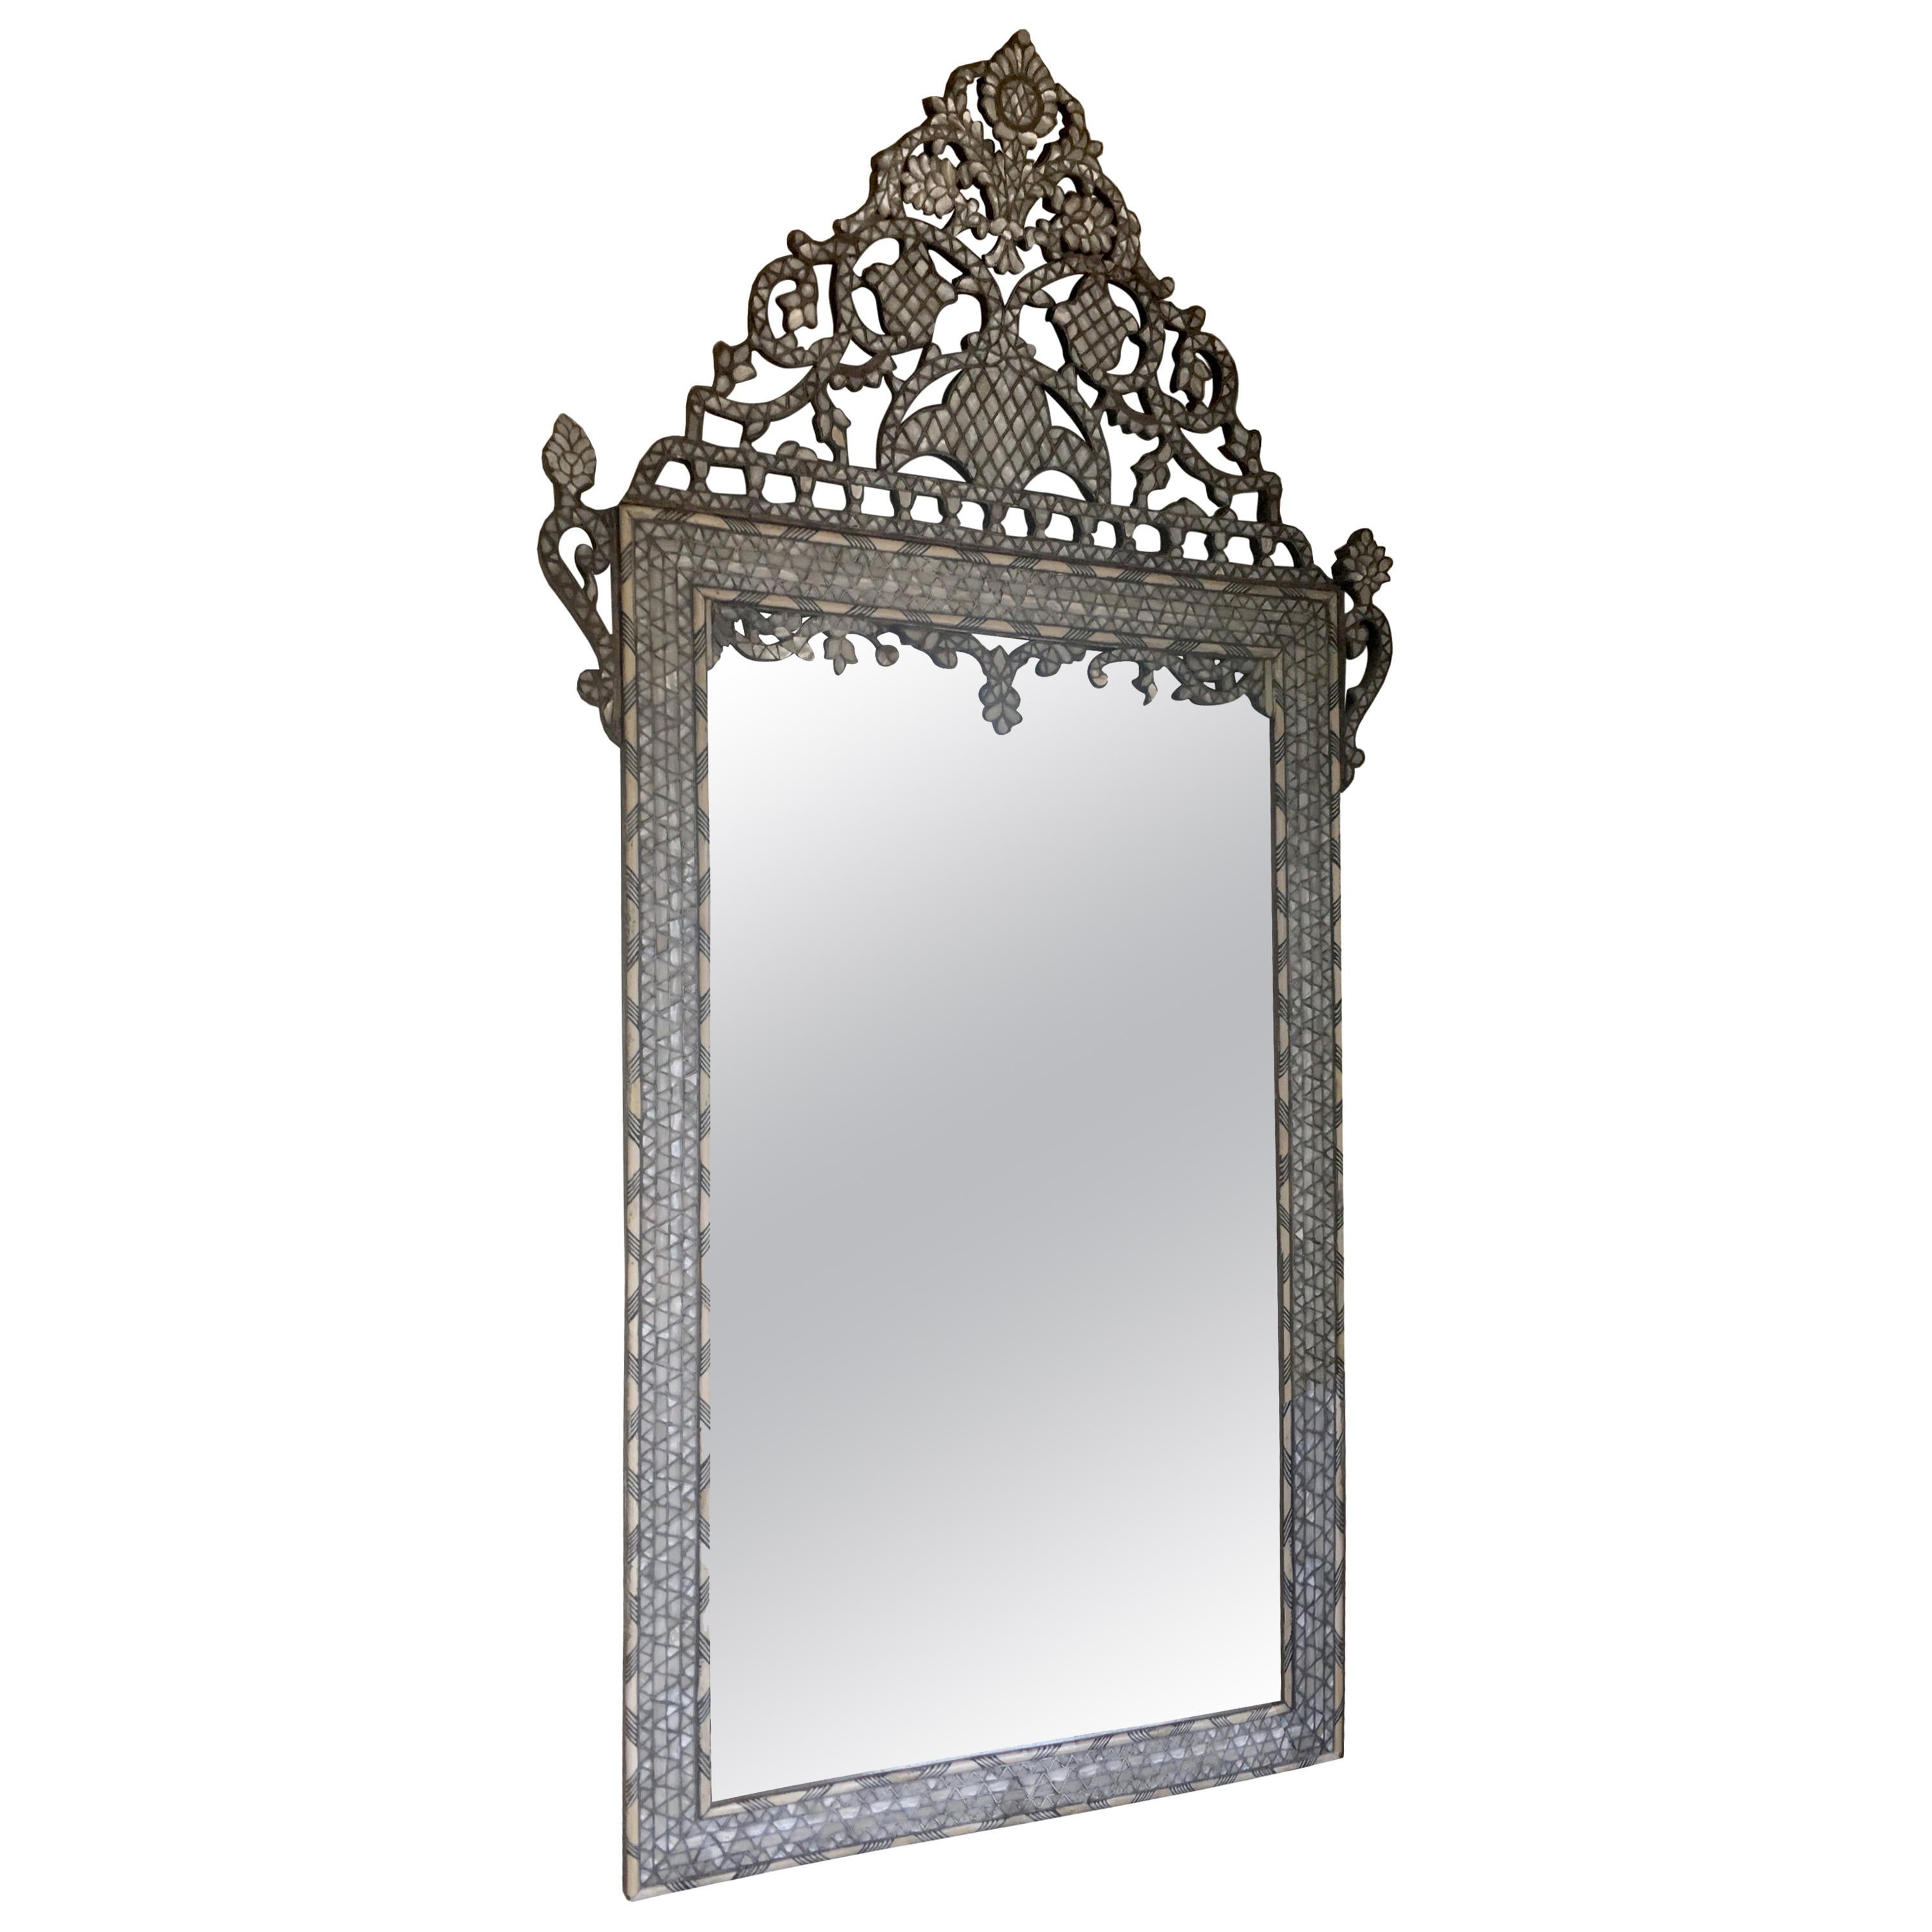 Late 19th Century Bone Moroccan Inlaid Mirror